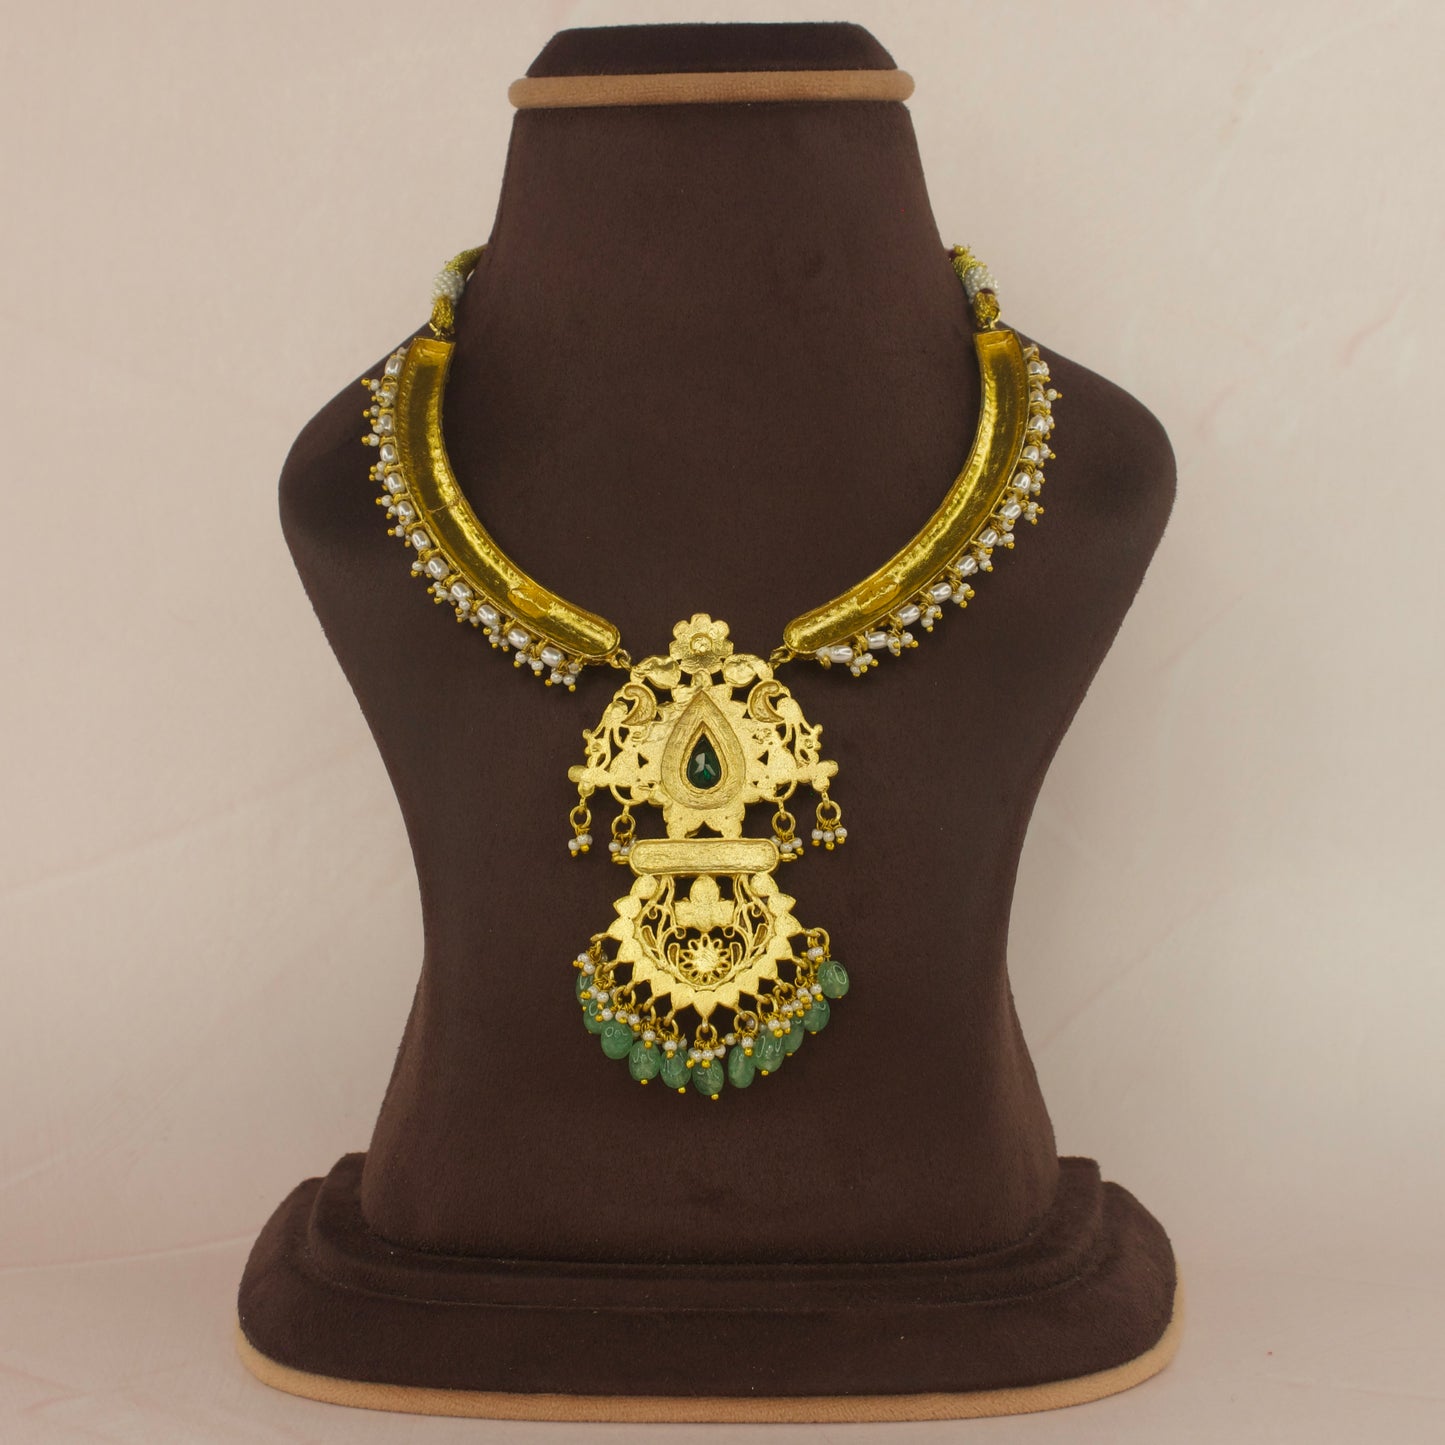 Regal Jadau Kundan Kanti Necklace with Pearl  Detailing with 22k gold plating. this product belongs to jadau kundan jewellery category